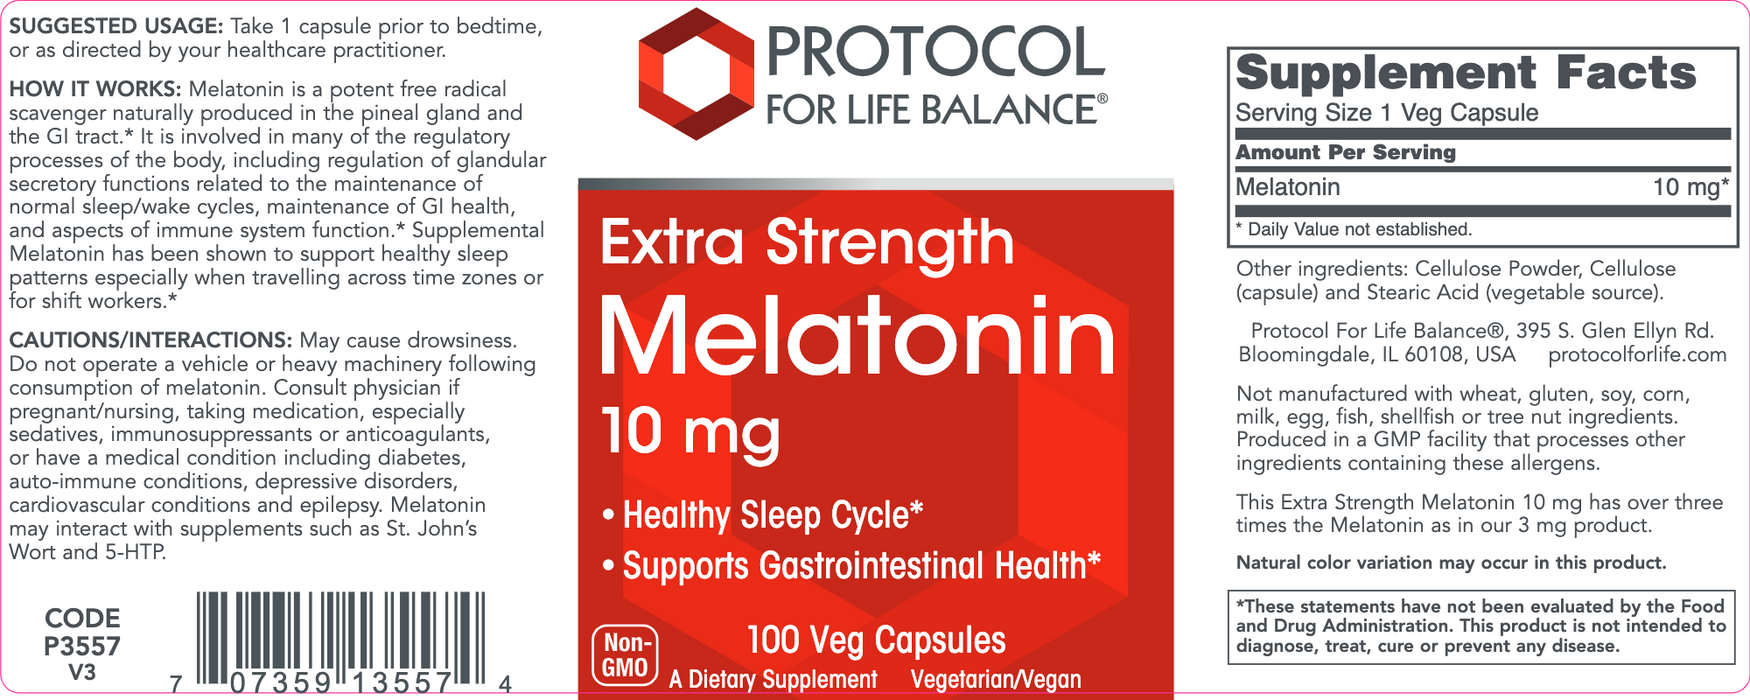 Melatonin-Vitamins & Supplements-Protocol For Life Balance-10 mg - 100 Capsules-Pine Street Clinic